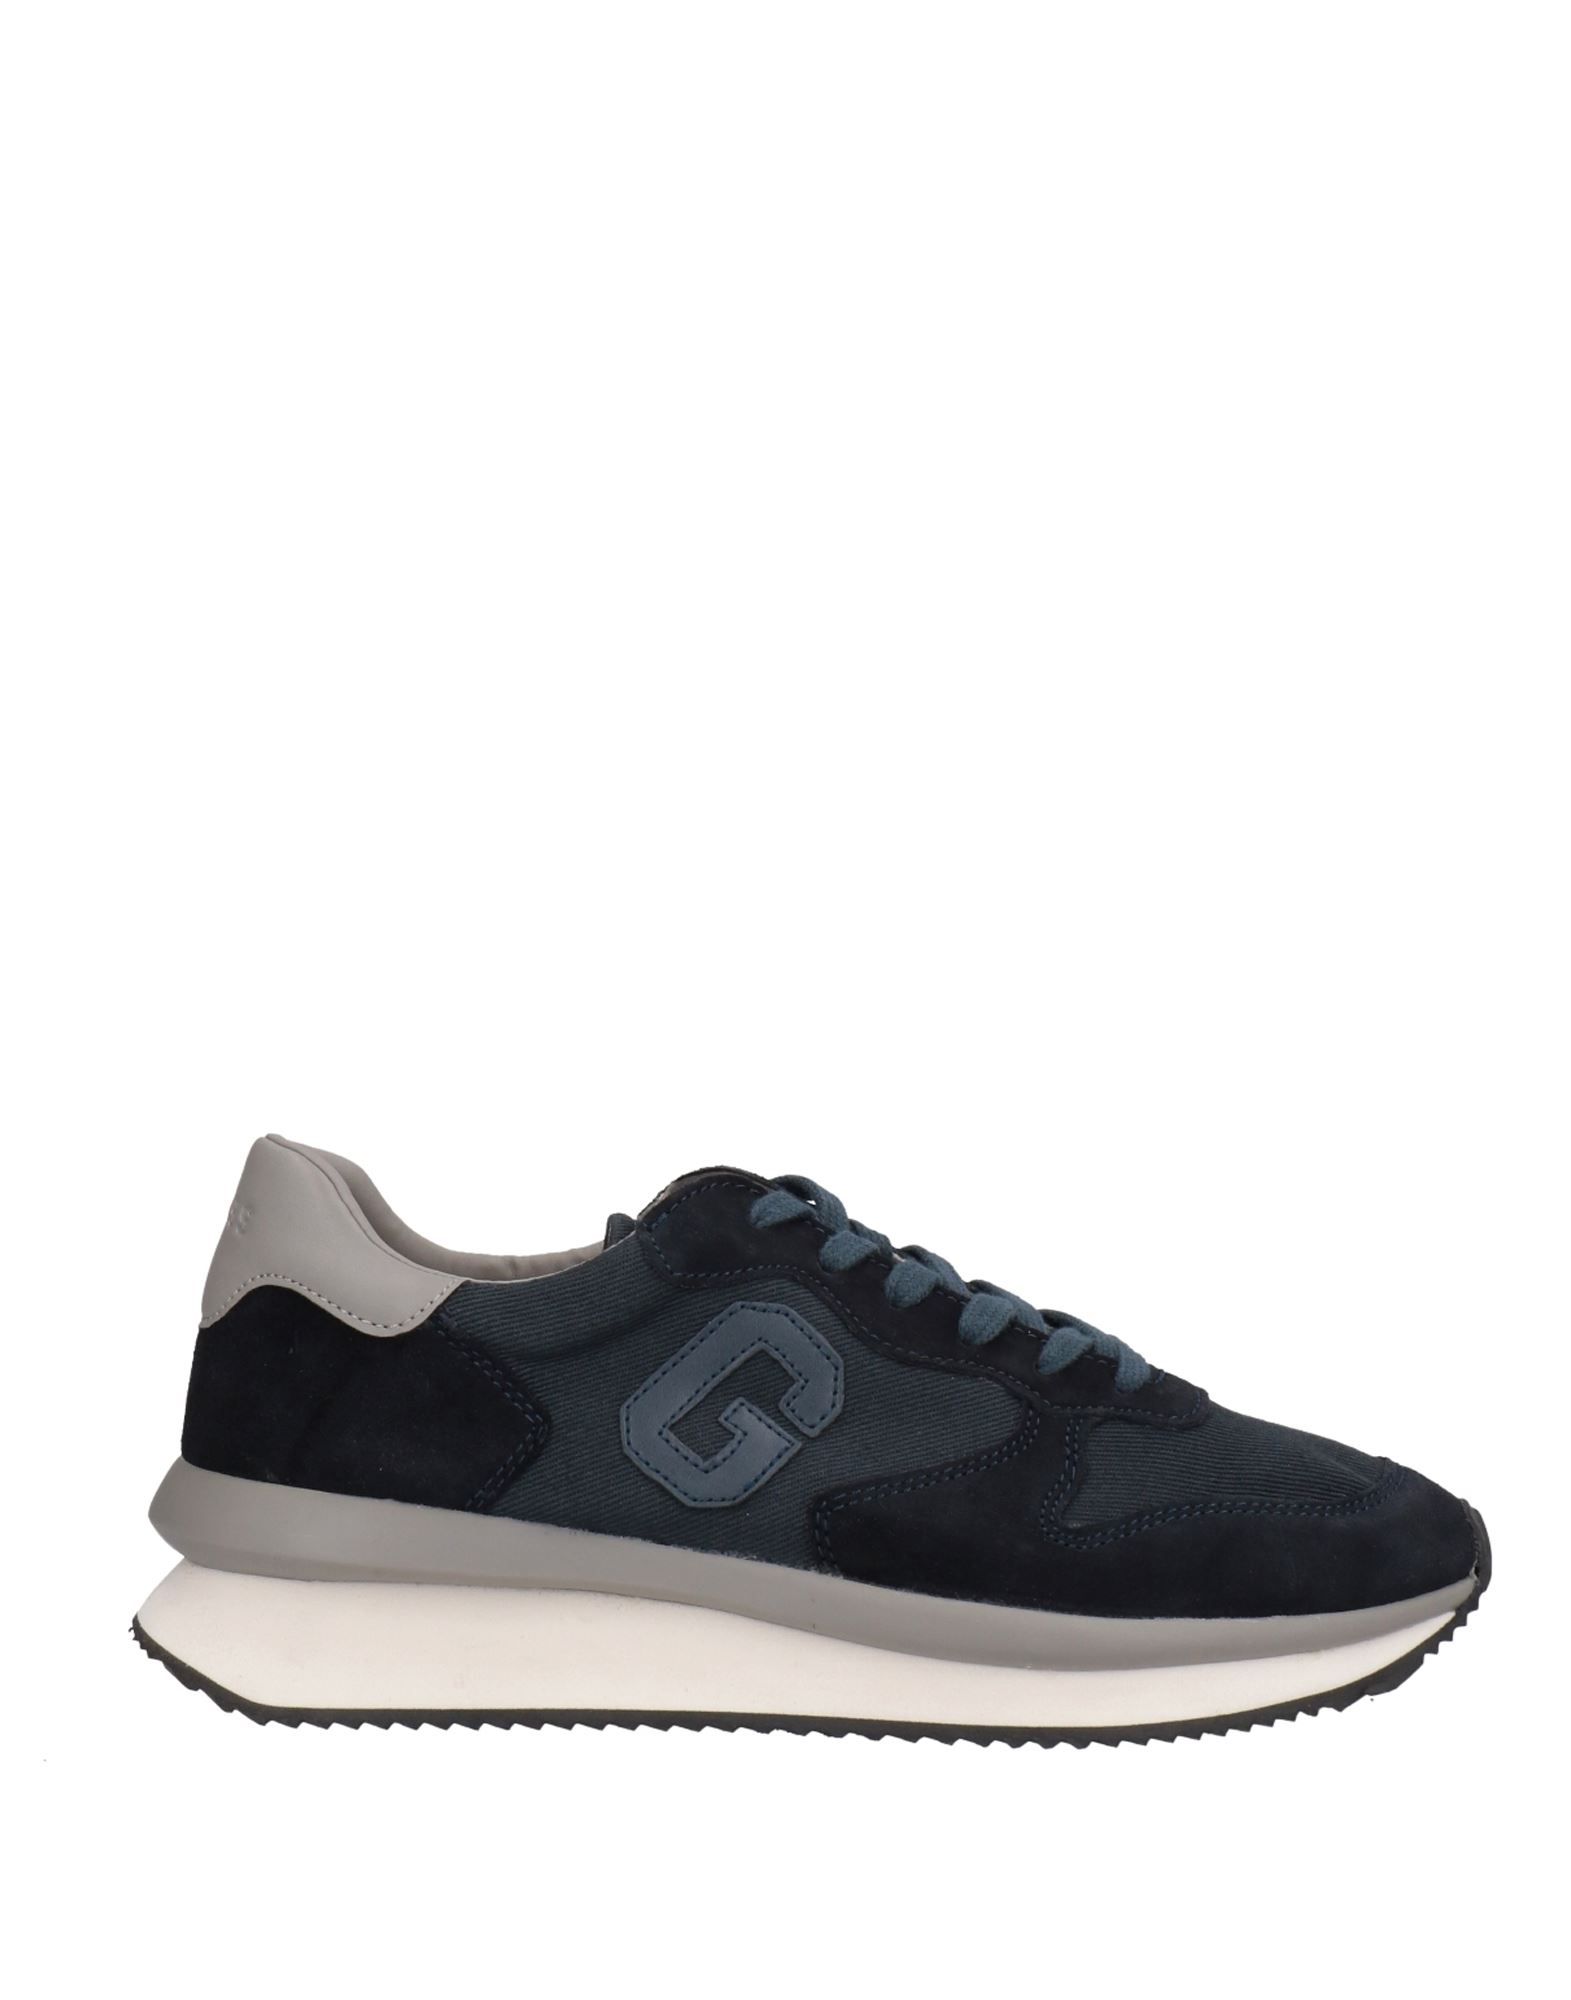 Guess Sneakers In Dark Blue